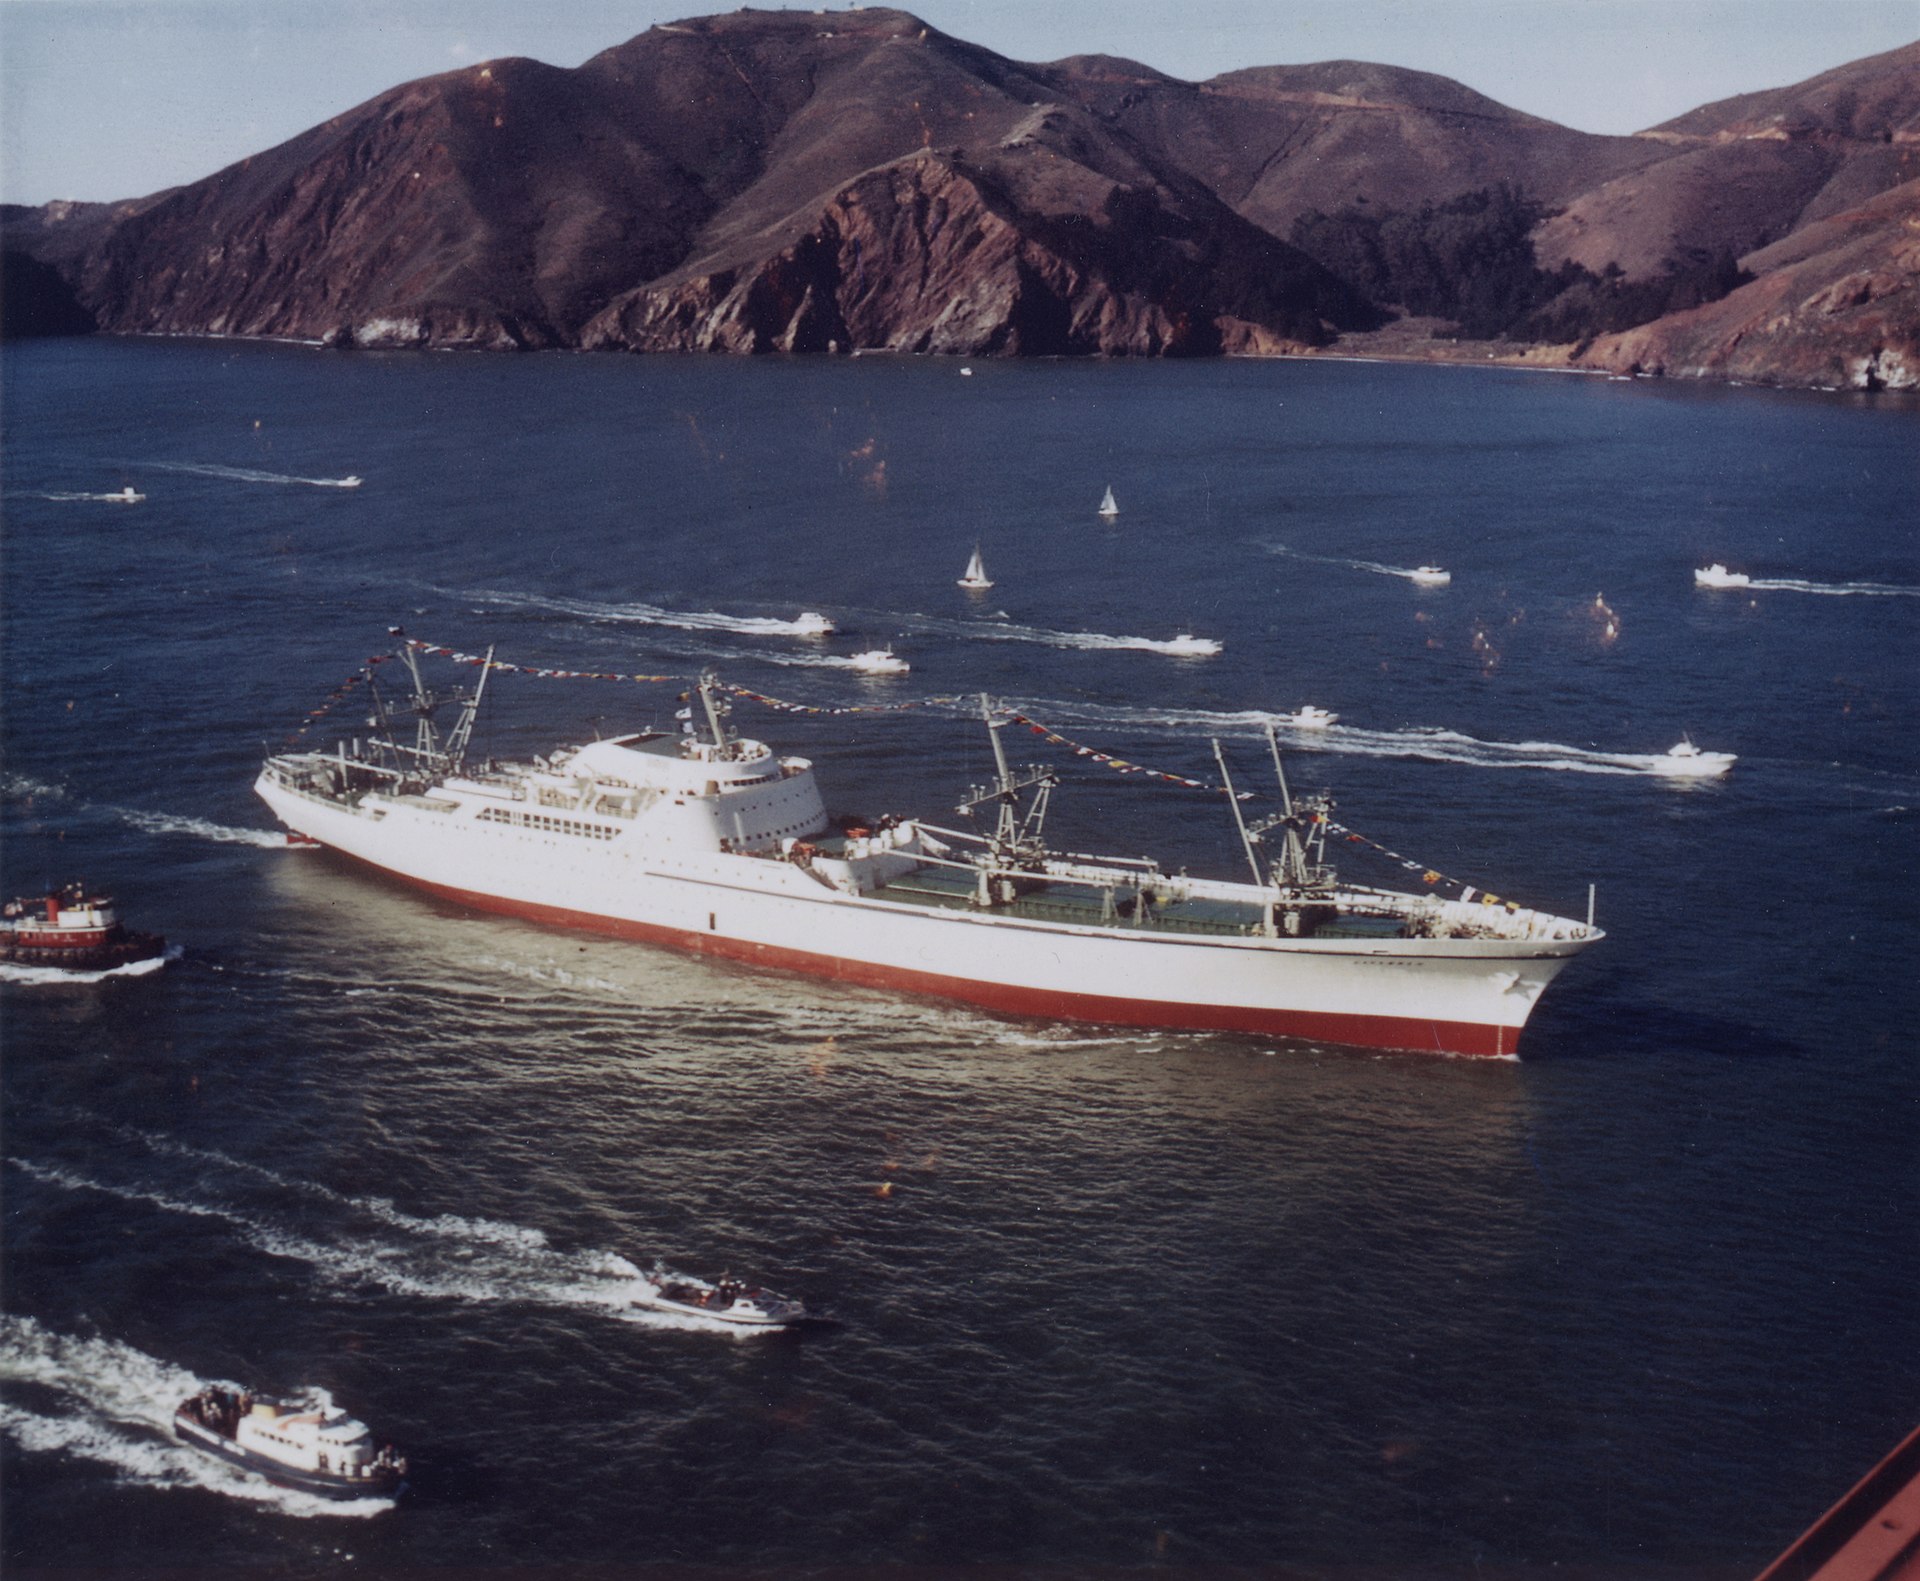 Image of nuclear-powered merchant ship, the NS Savannah